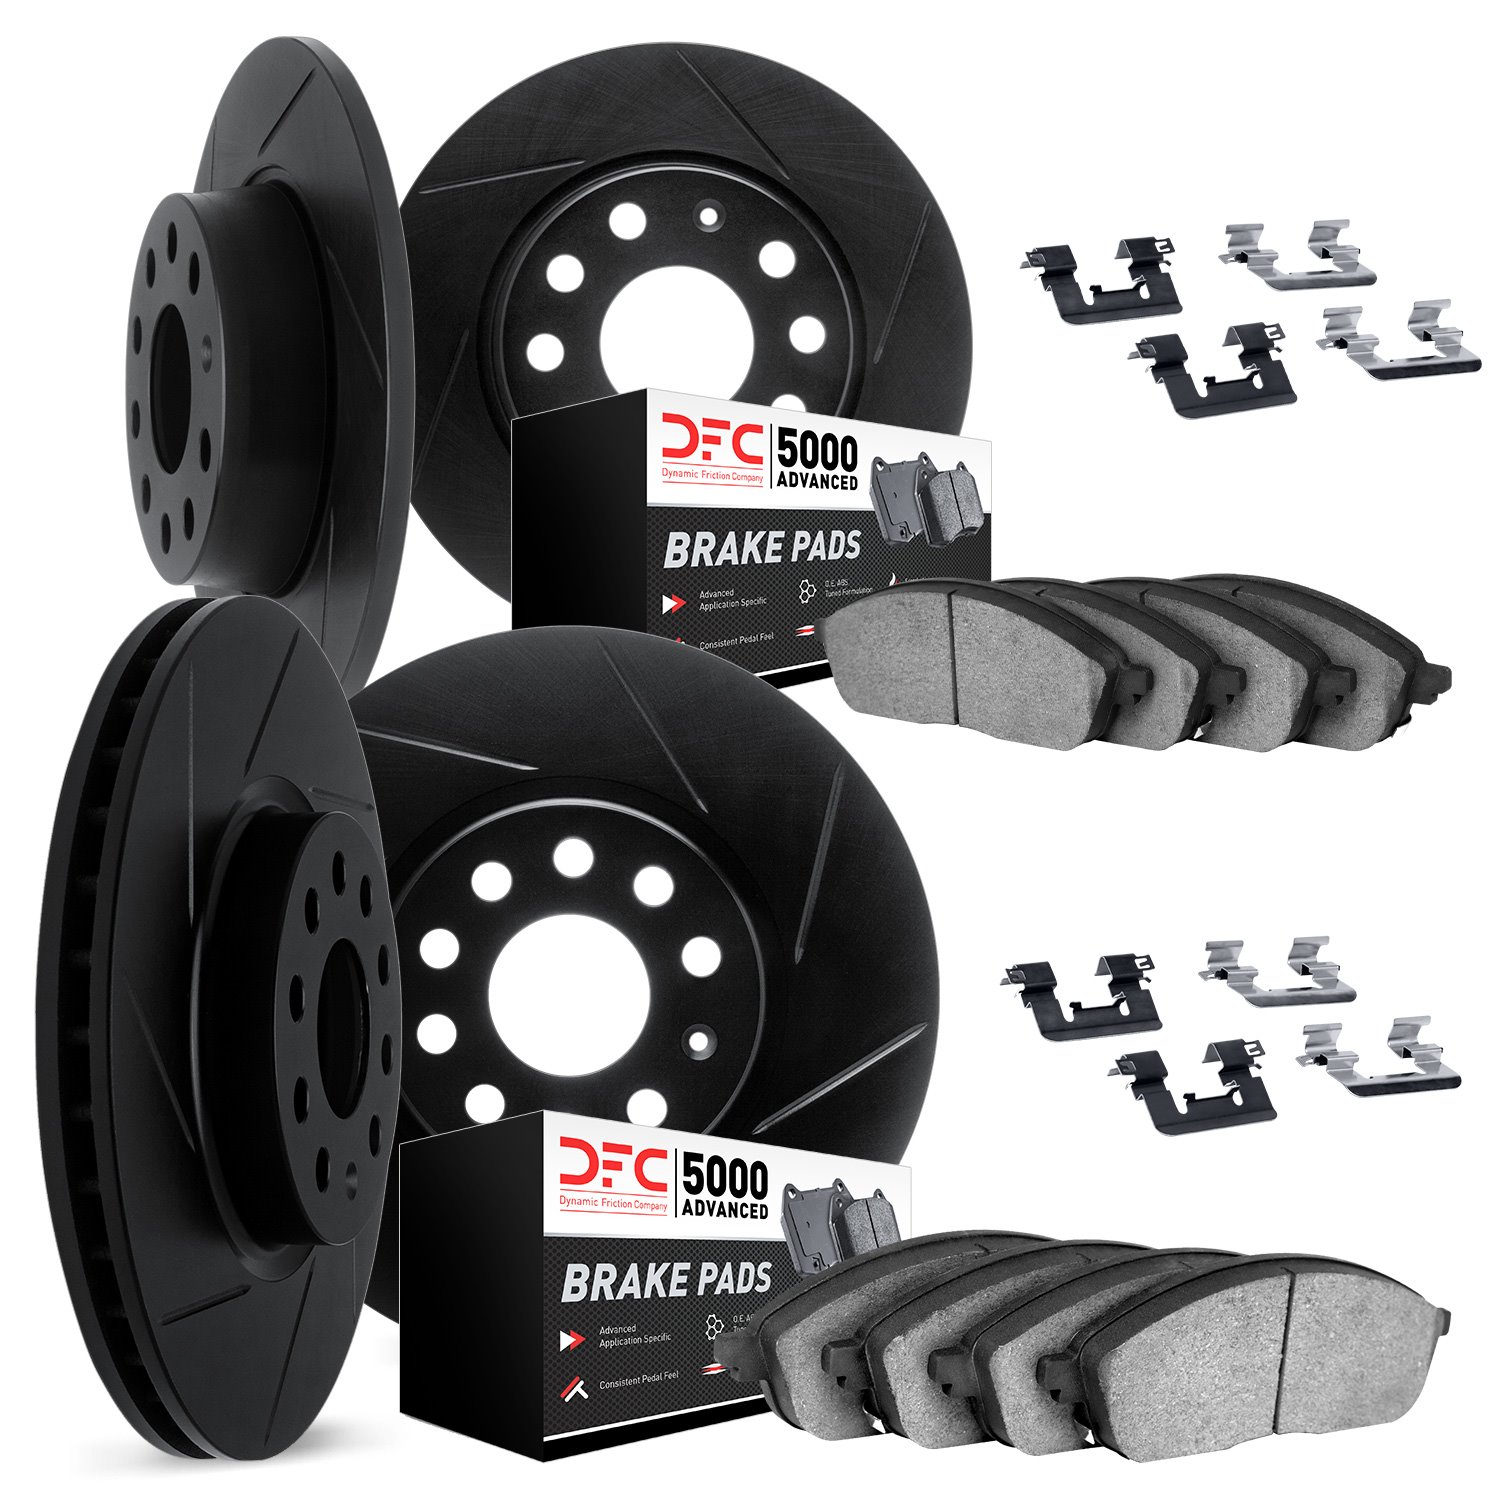 3514-42005 Slotted Brake Rotors w/5000 Advanced Brake Pads Kit & Hardware [Black], 2003-2007 Mopar, Position: Front and Rear